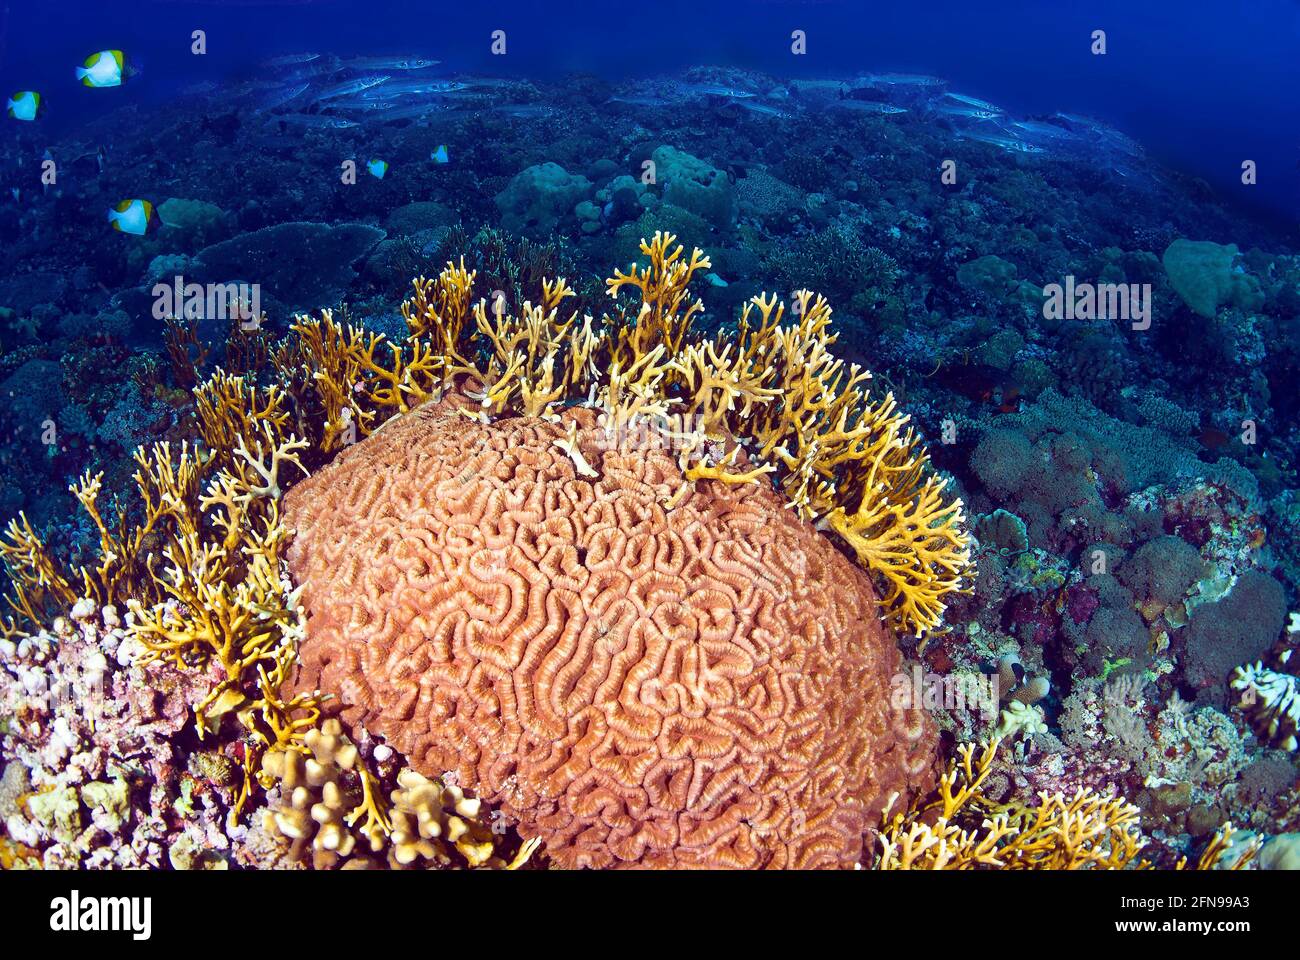 Brain coral and fire coral, school of bigeye barracuda (Sphyraena forsteri) beyond Stock Photo